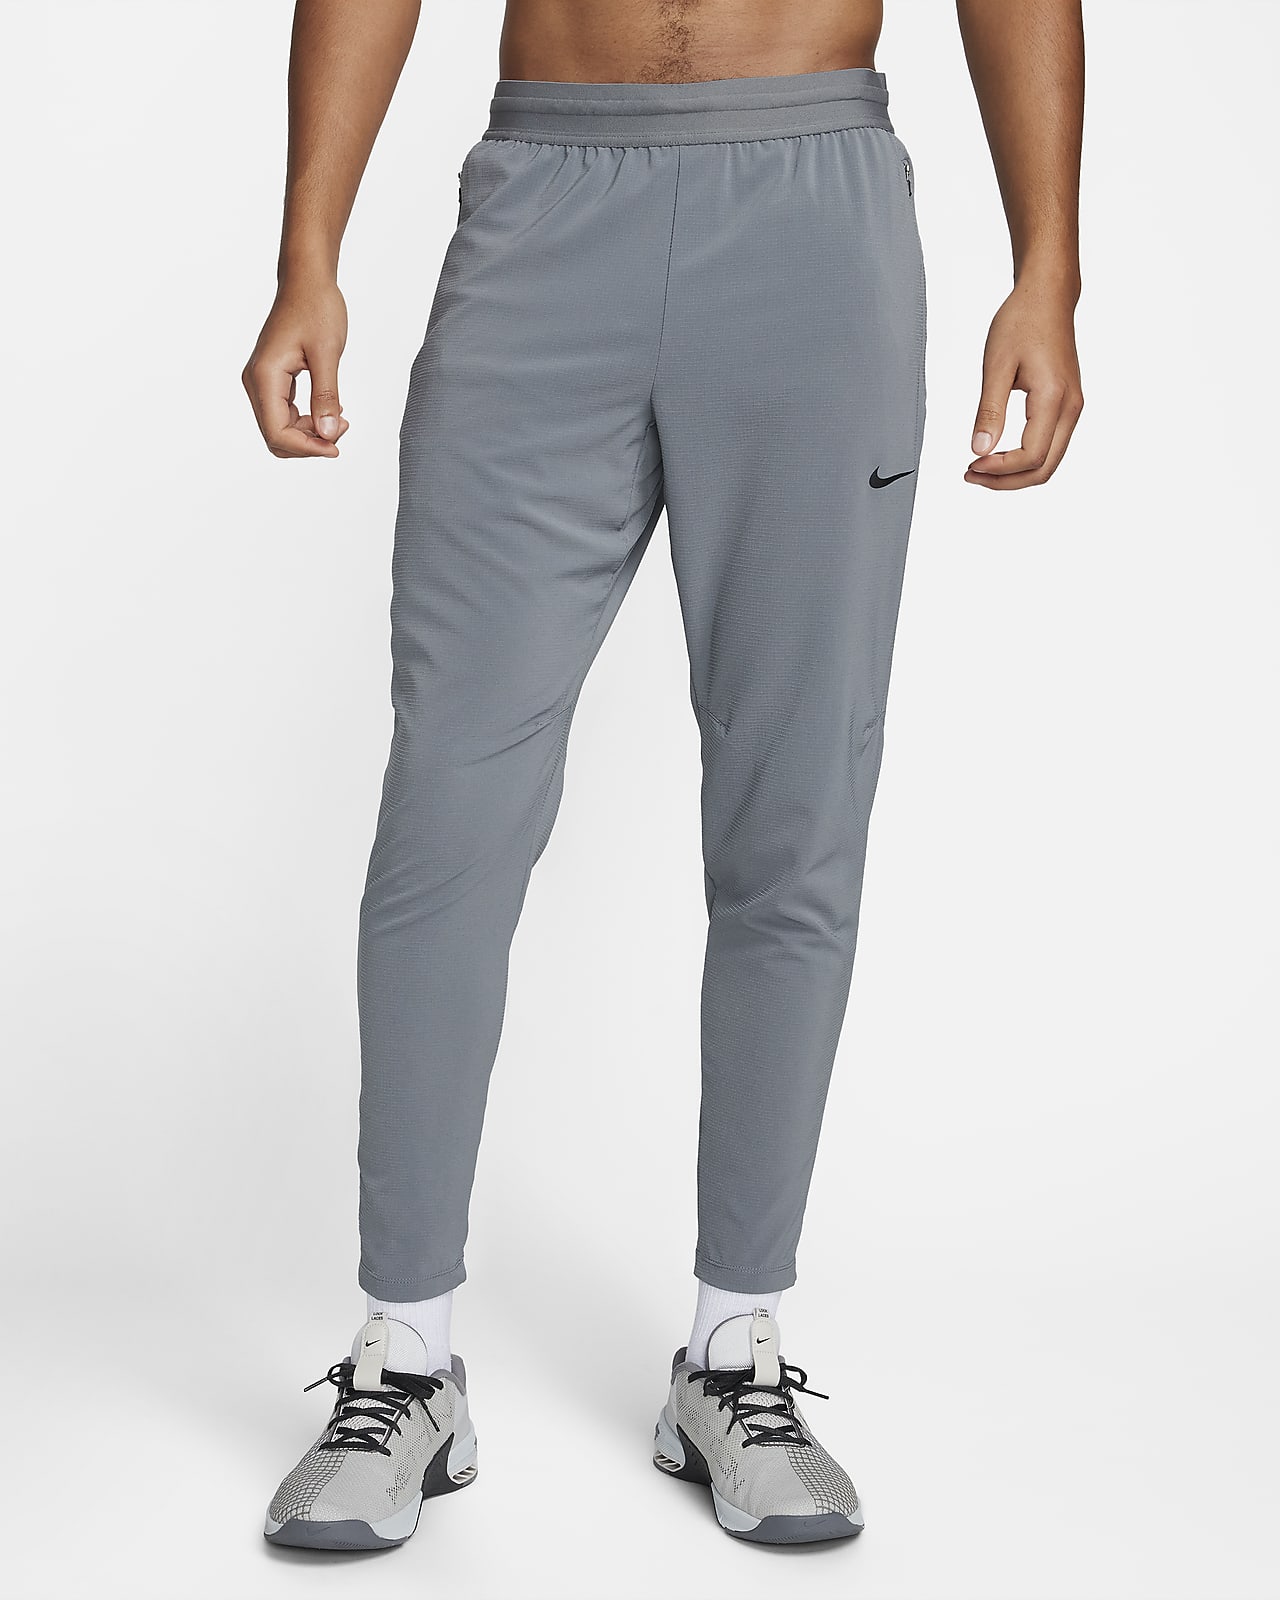 Pantaloni da fitness Dri-FIT Nike Flex Rep – Uomo